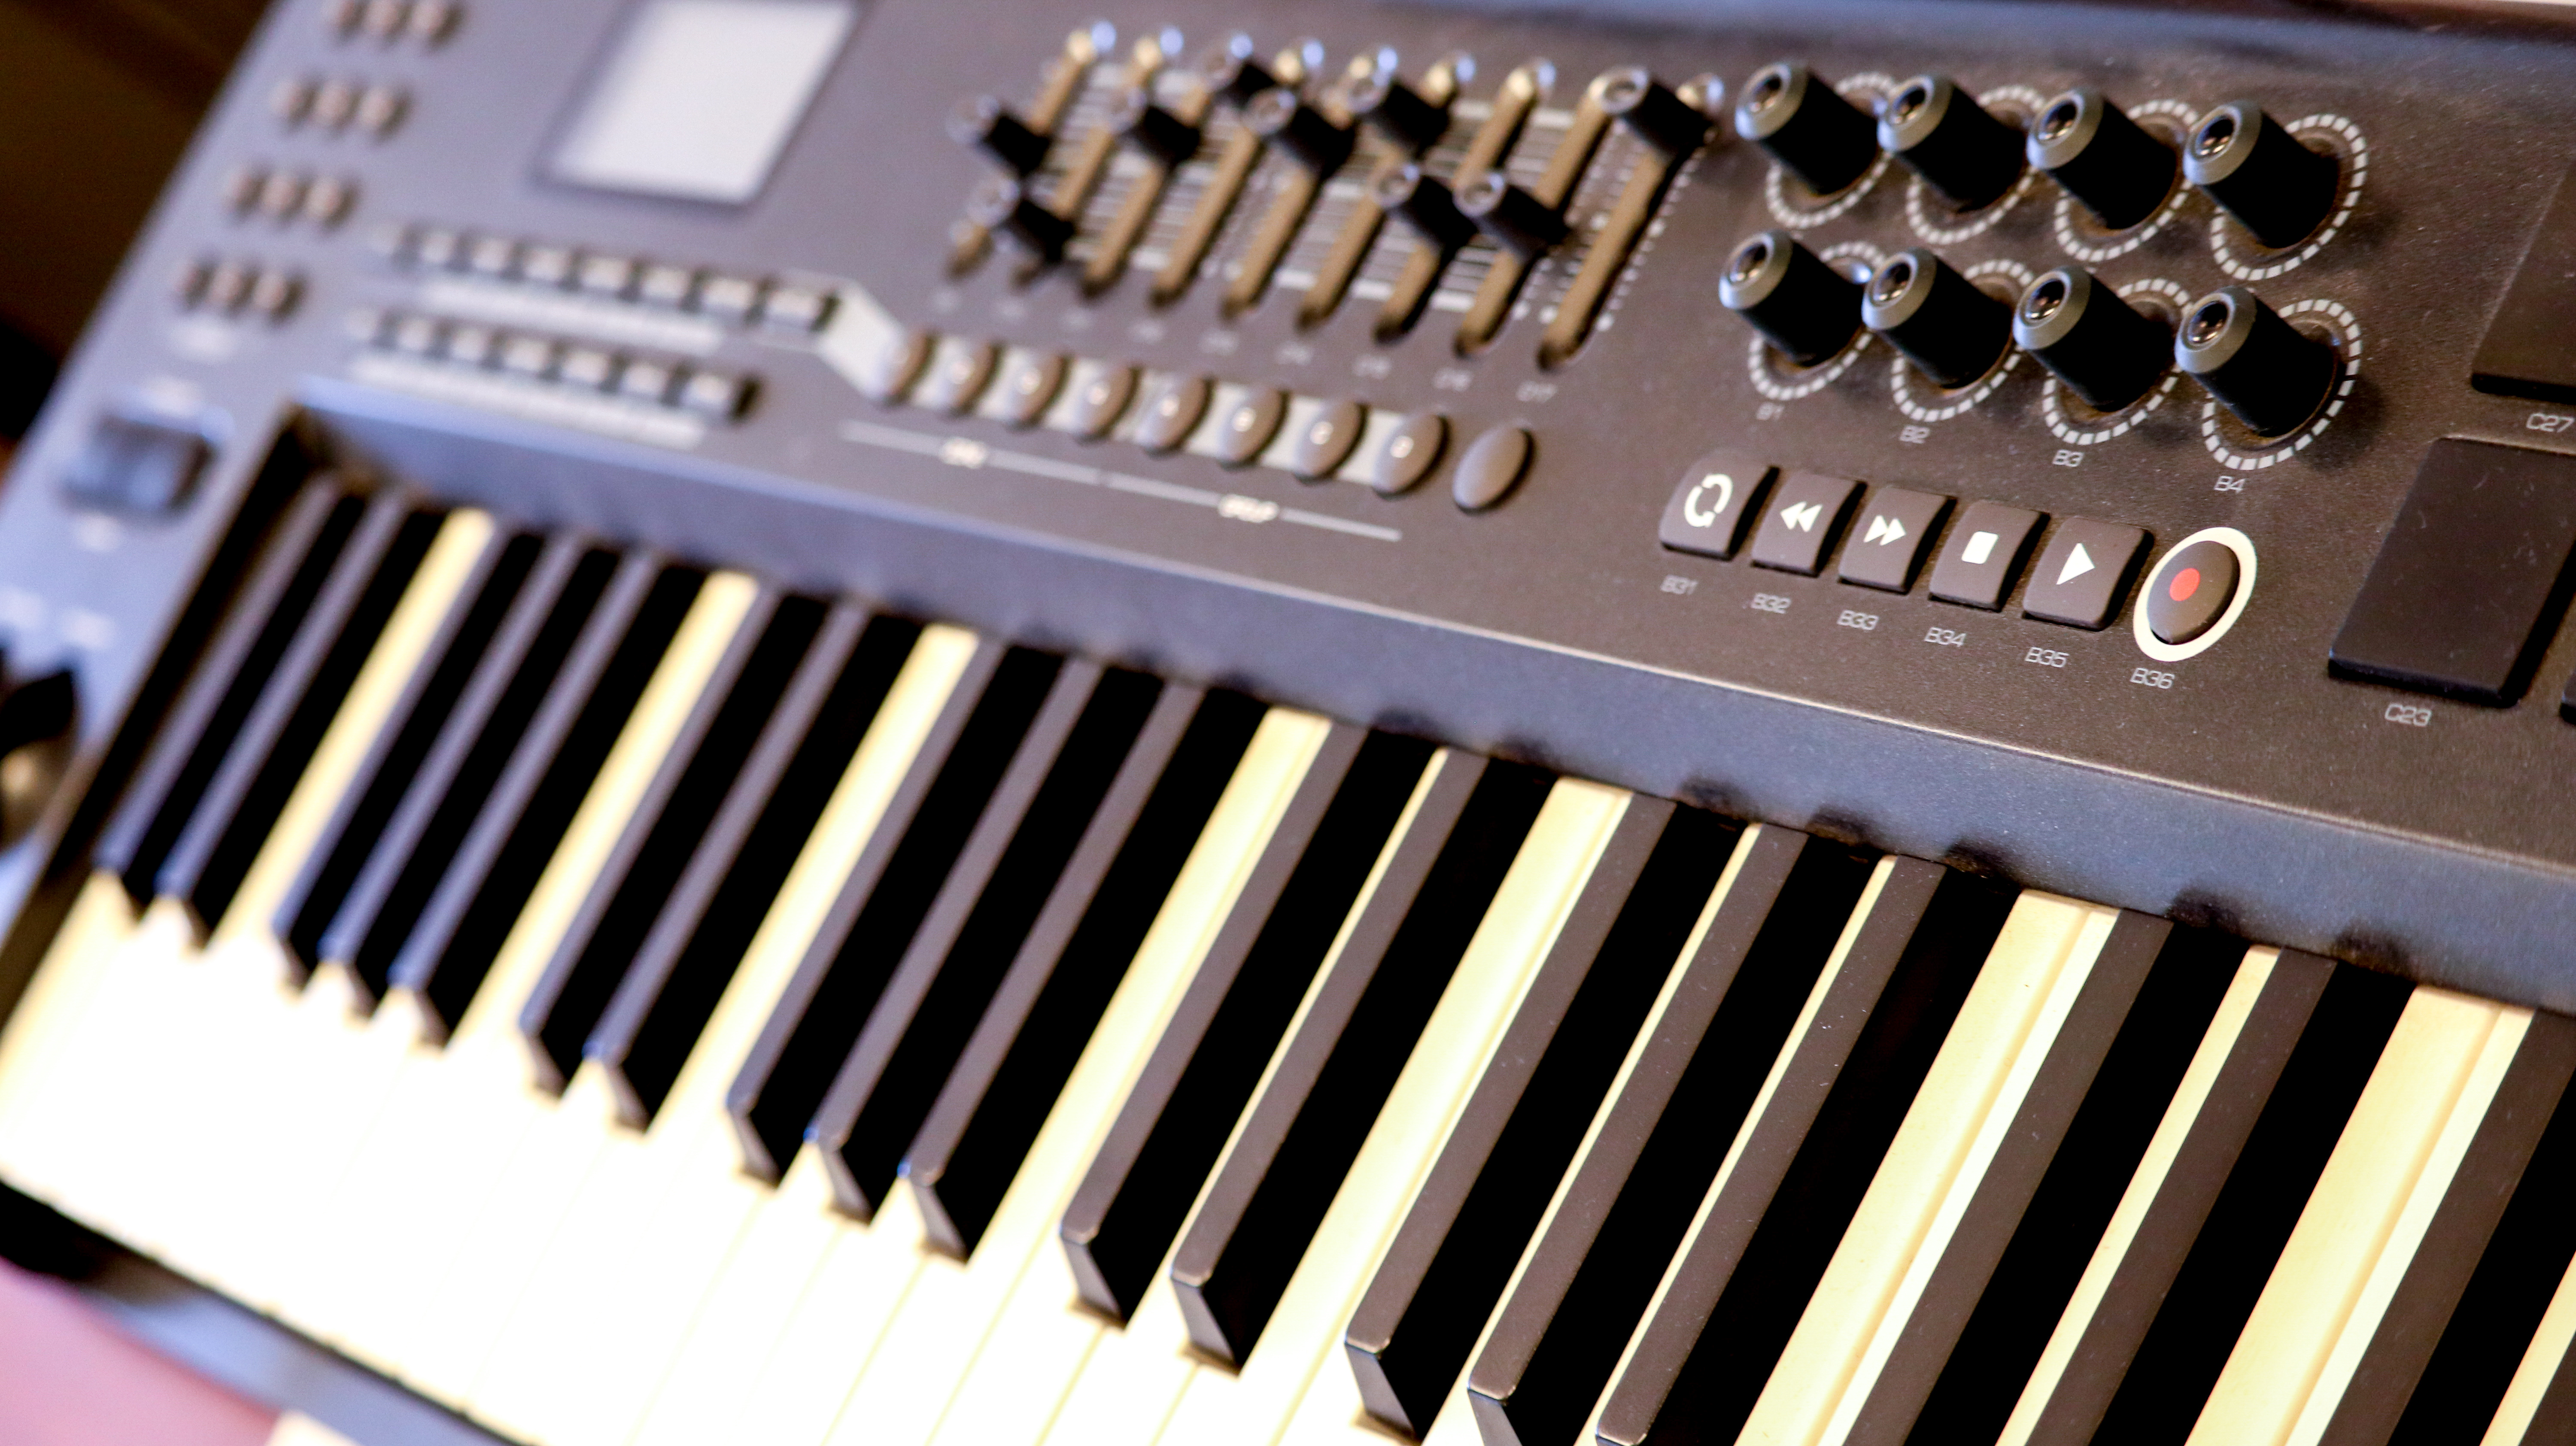 Photograph of electronic keyboard